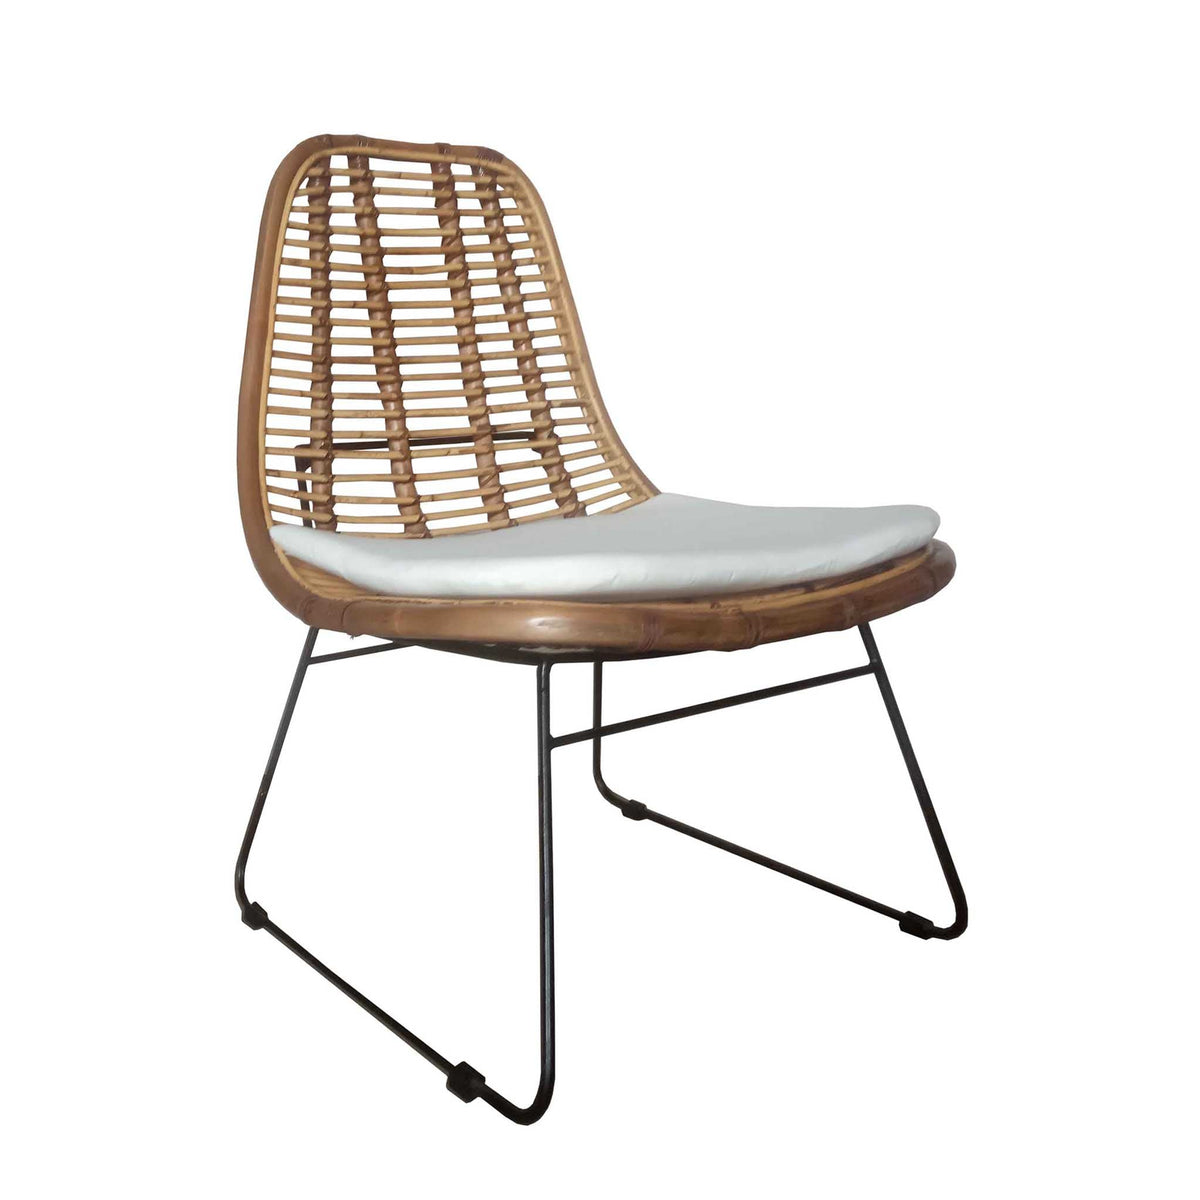 Miri Rattan Chair from Roseland Furniture